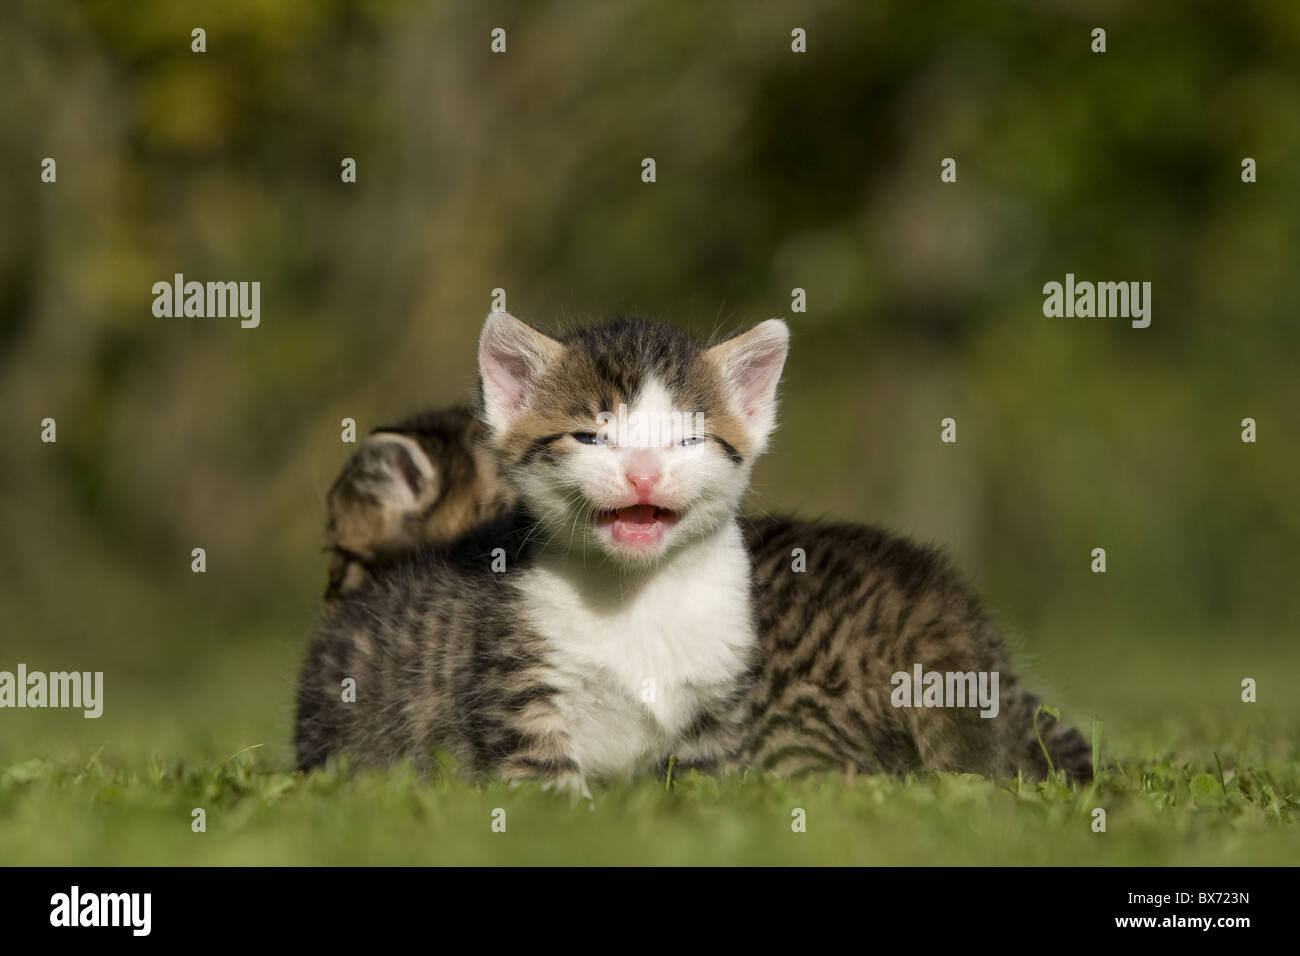 Katze, Kaetzchen miauend, lachend auf Wiese, Cat, kitten laughing, miaowing on a meadow Stock Photo